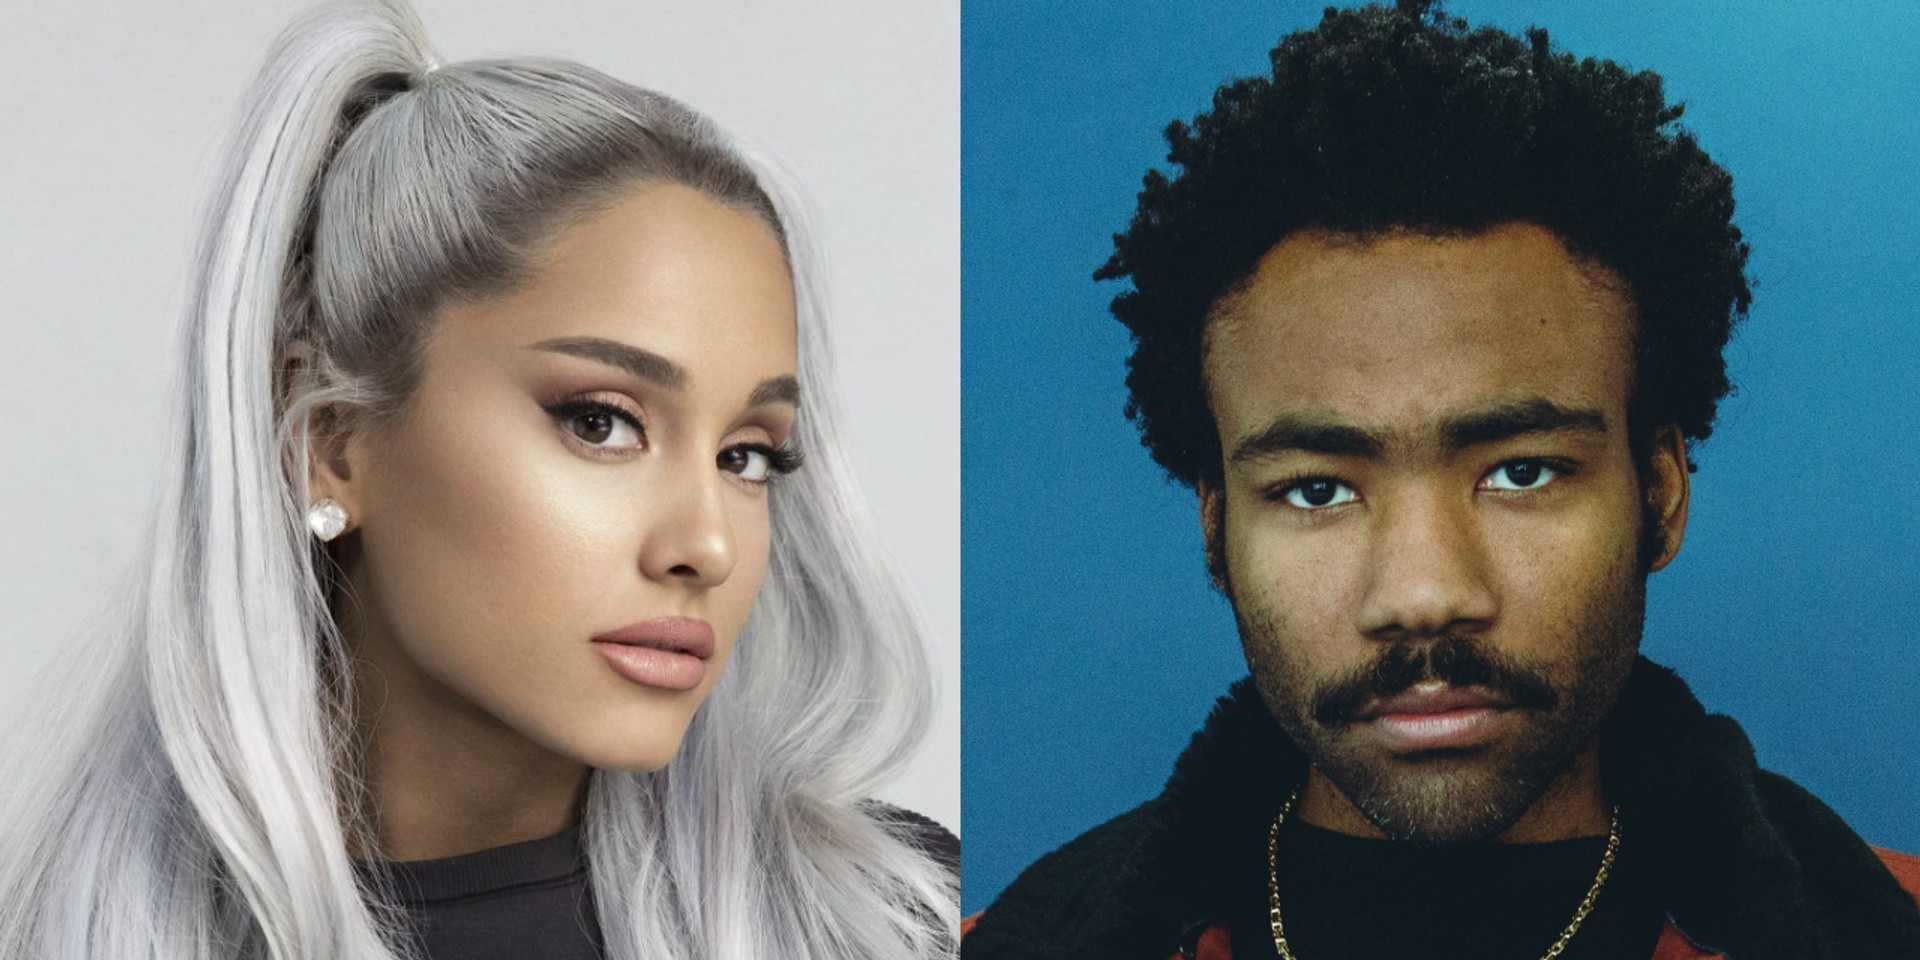 Coachella 2019 line-up announced – Childish Gambino, Ariana Grande, BLACKPINK get top billing